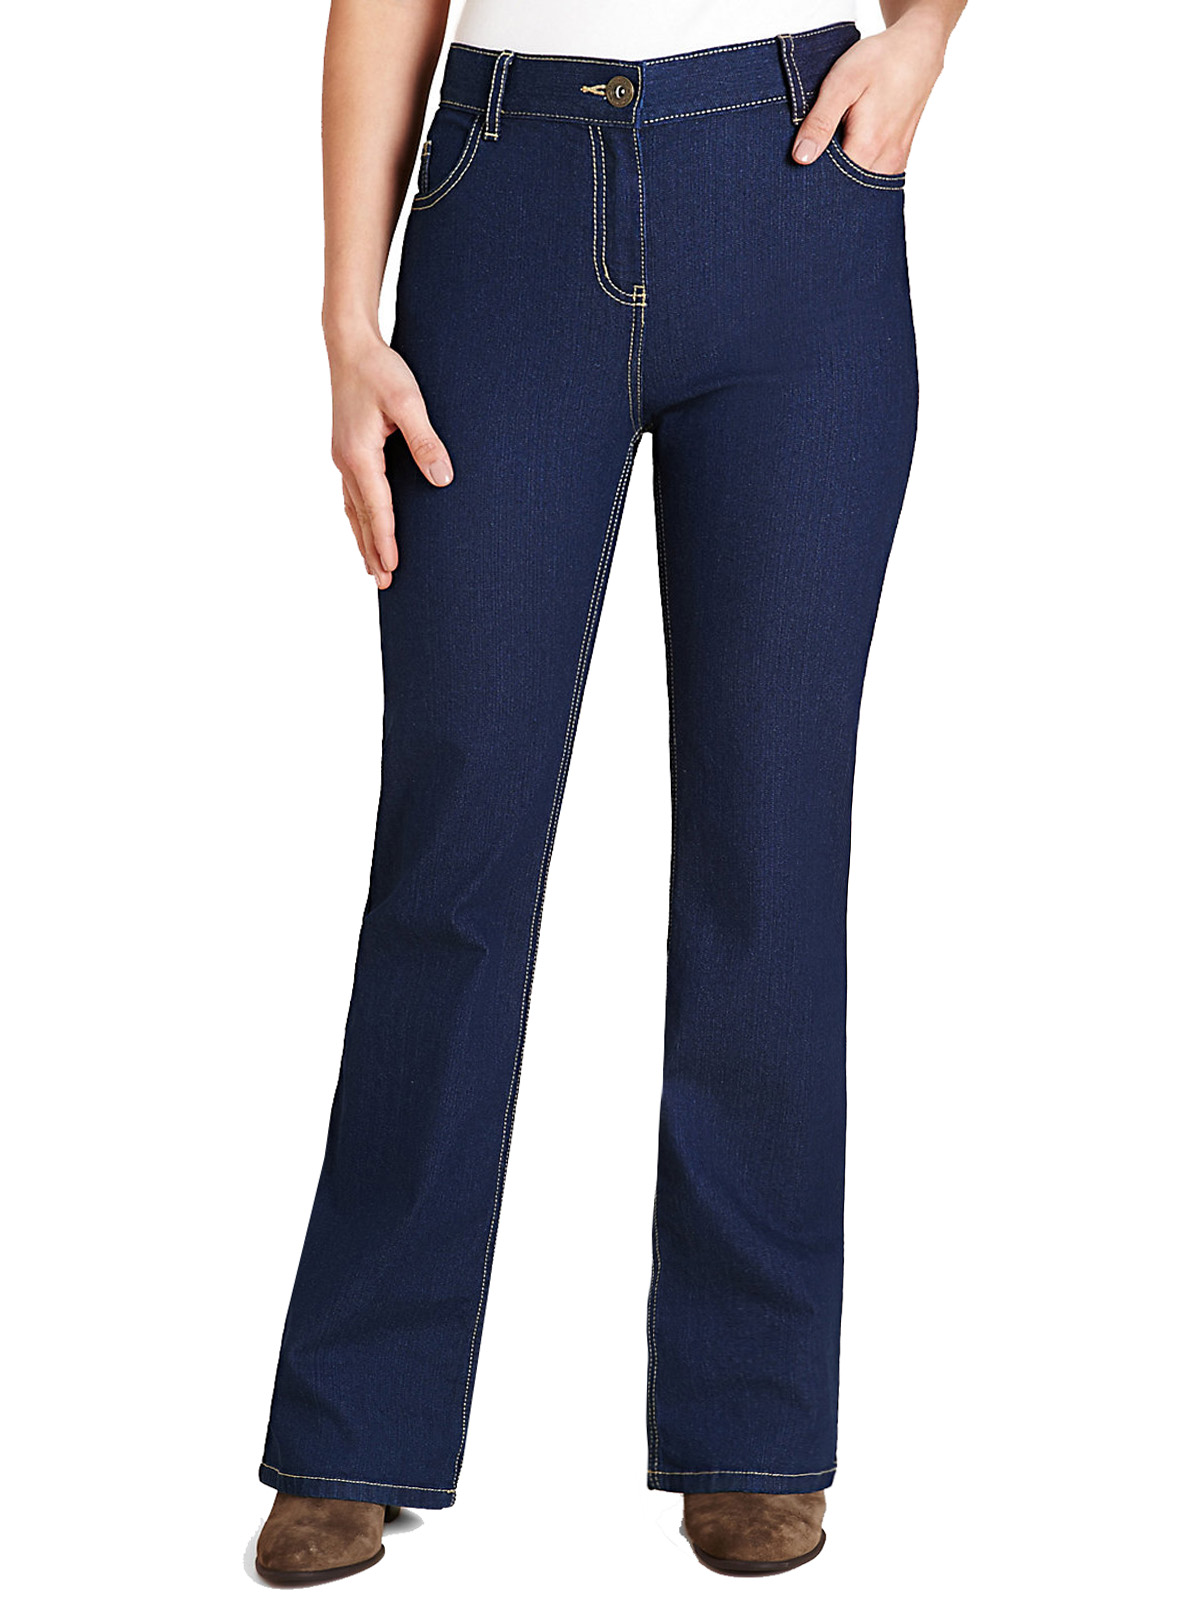 Marks and Spencer - - M&5 INDIGO Cotton Rich Bootcut Denim Jeans - Size 14